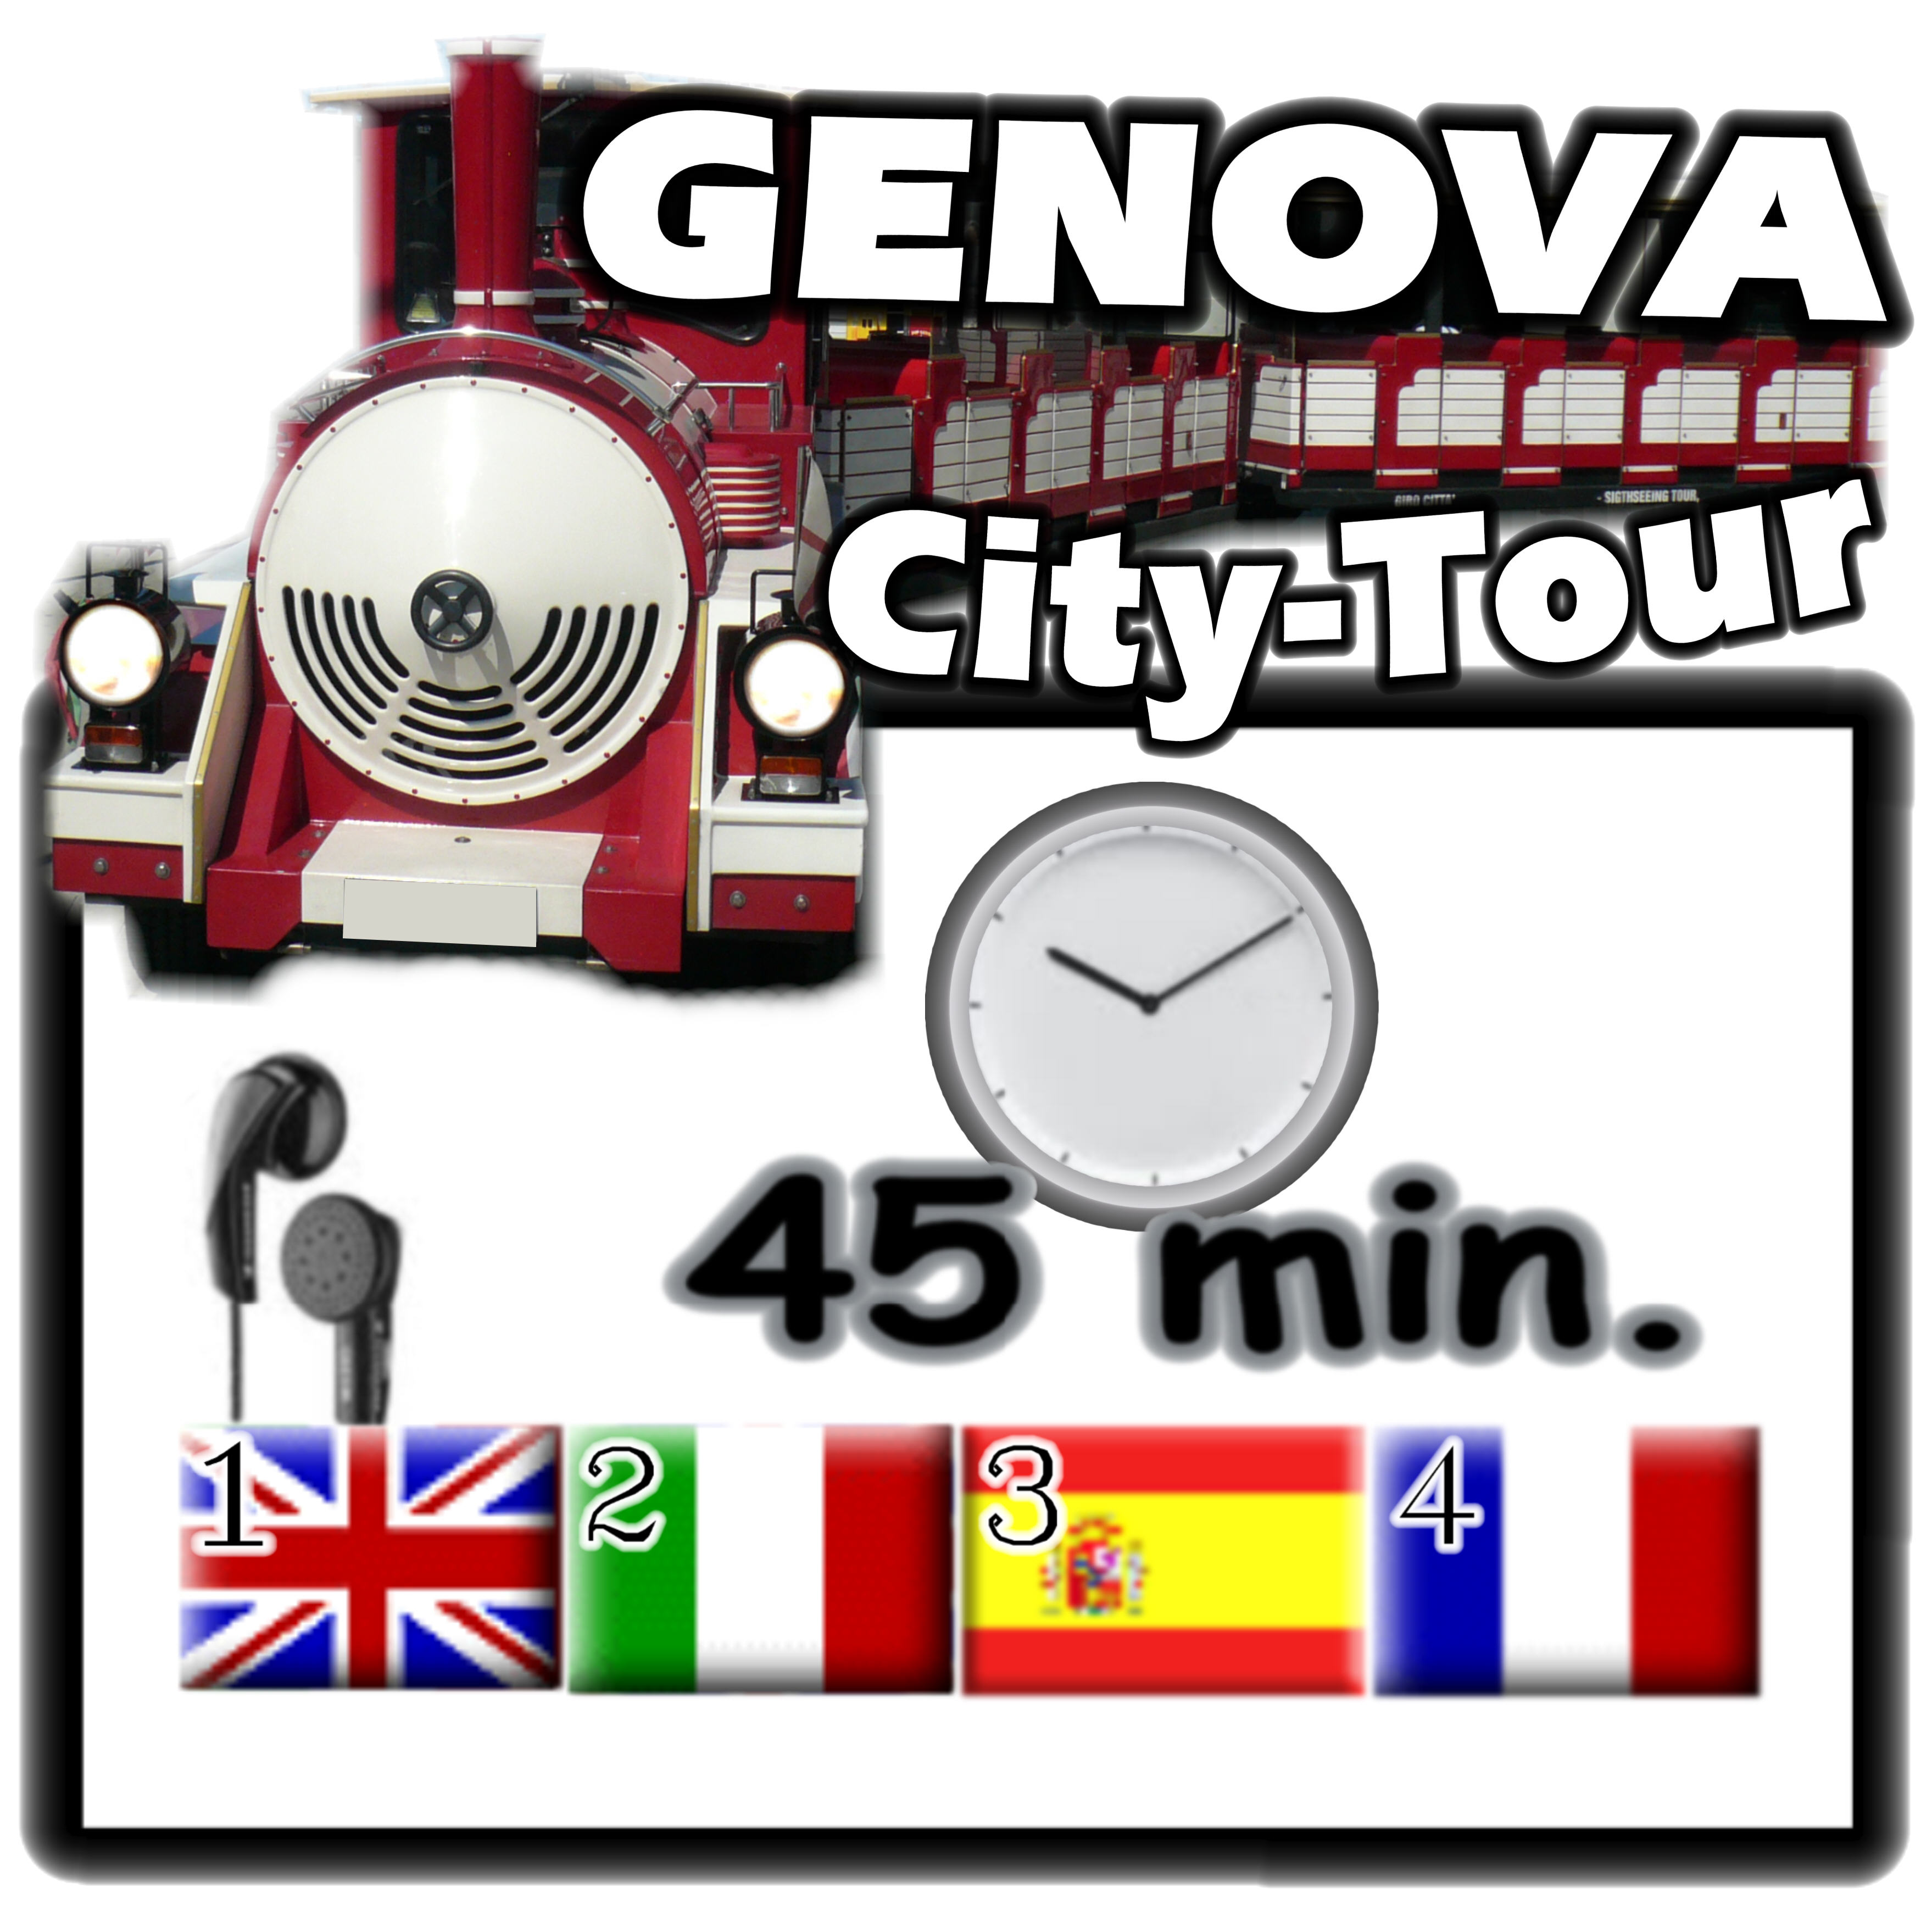 Genova citytour adesivo.jpg